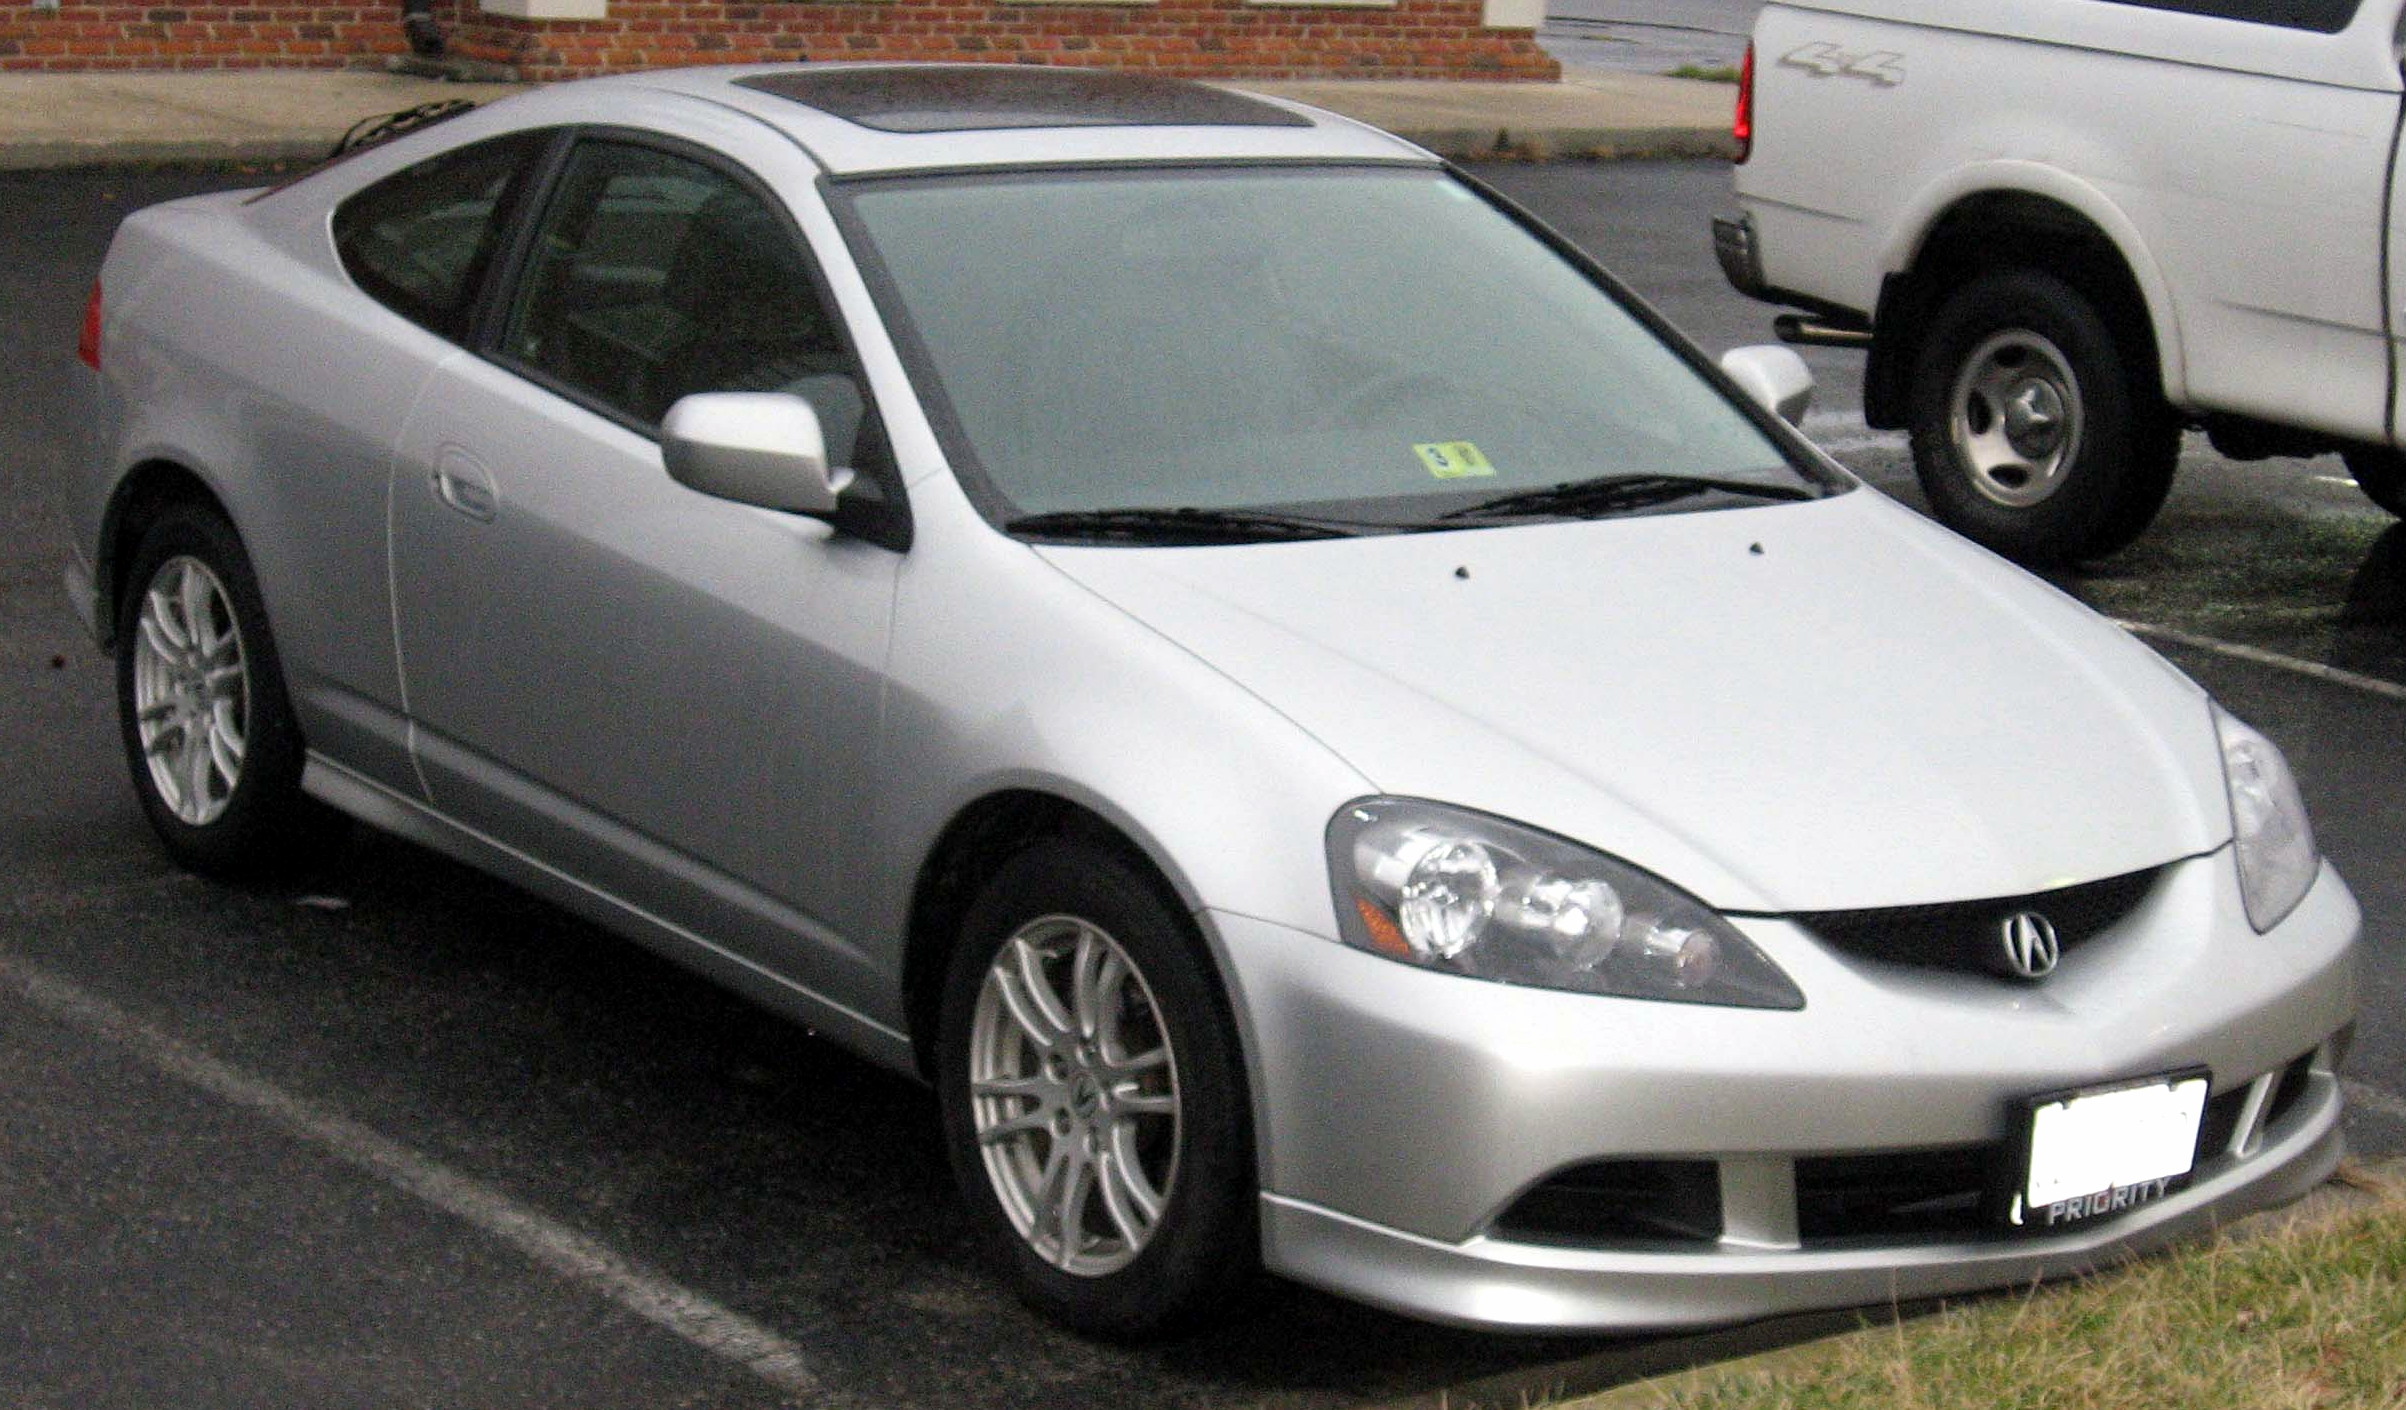 File:2005-06 Acura RSX.jpg - Wikimedia Commons